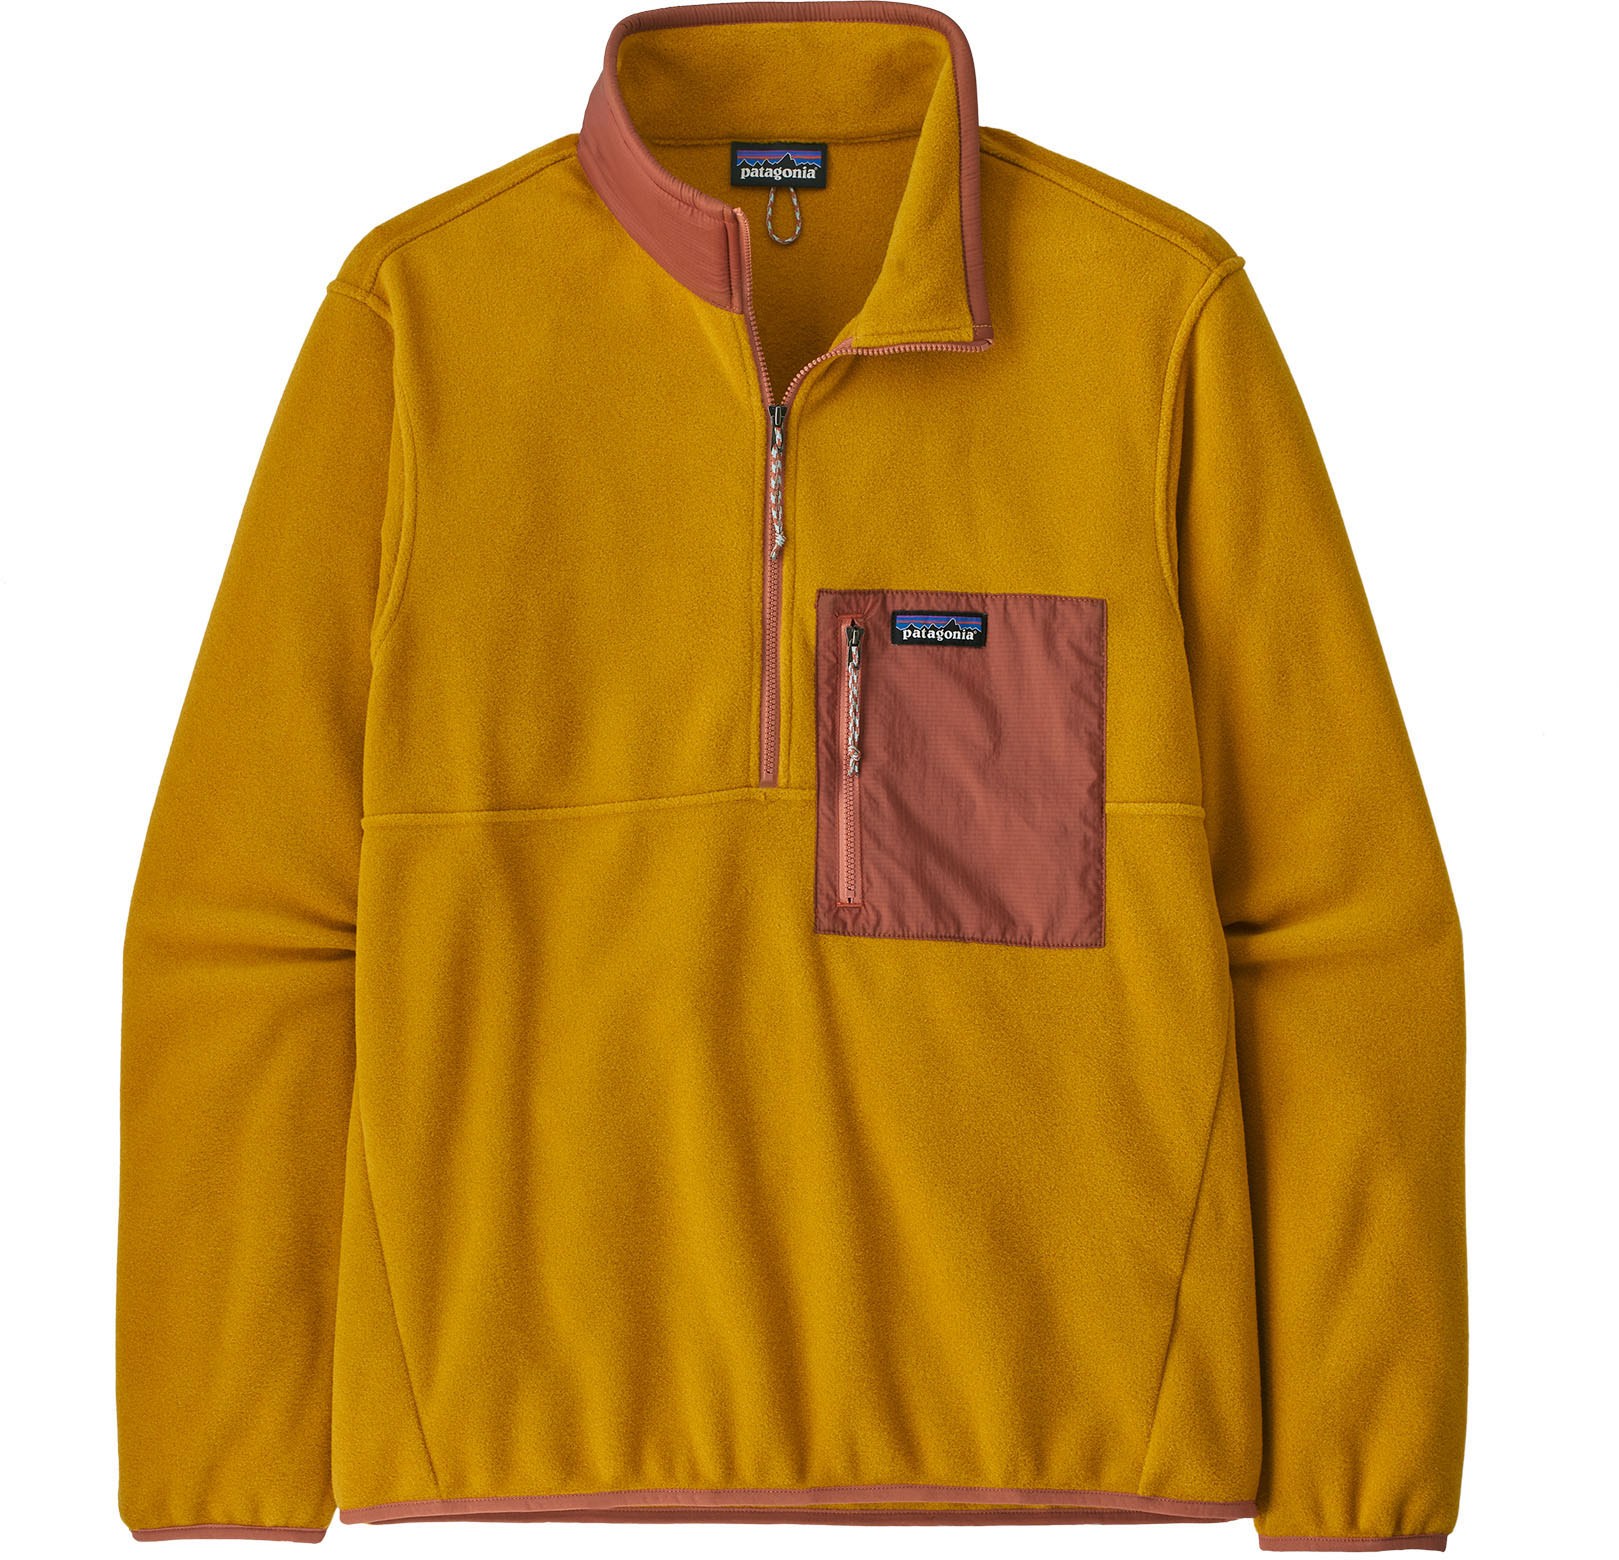 Пуловер Microdini с молнией до половины - мужской Patagonia, желтый